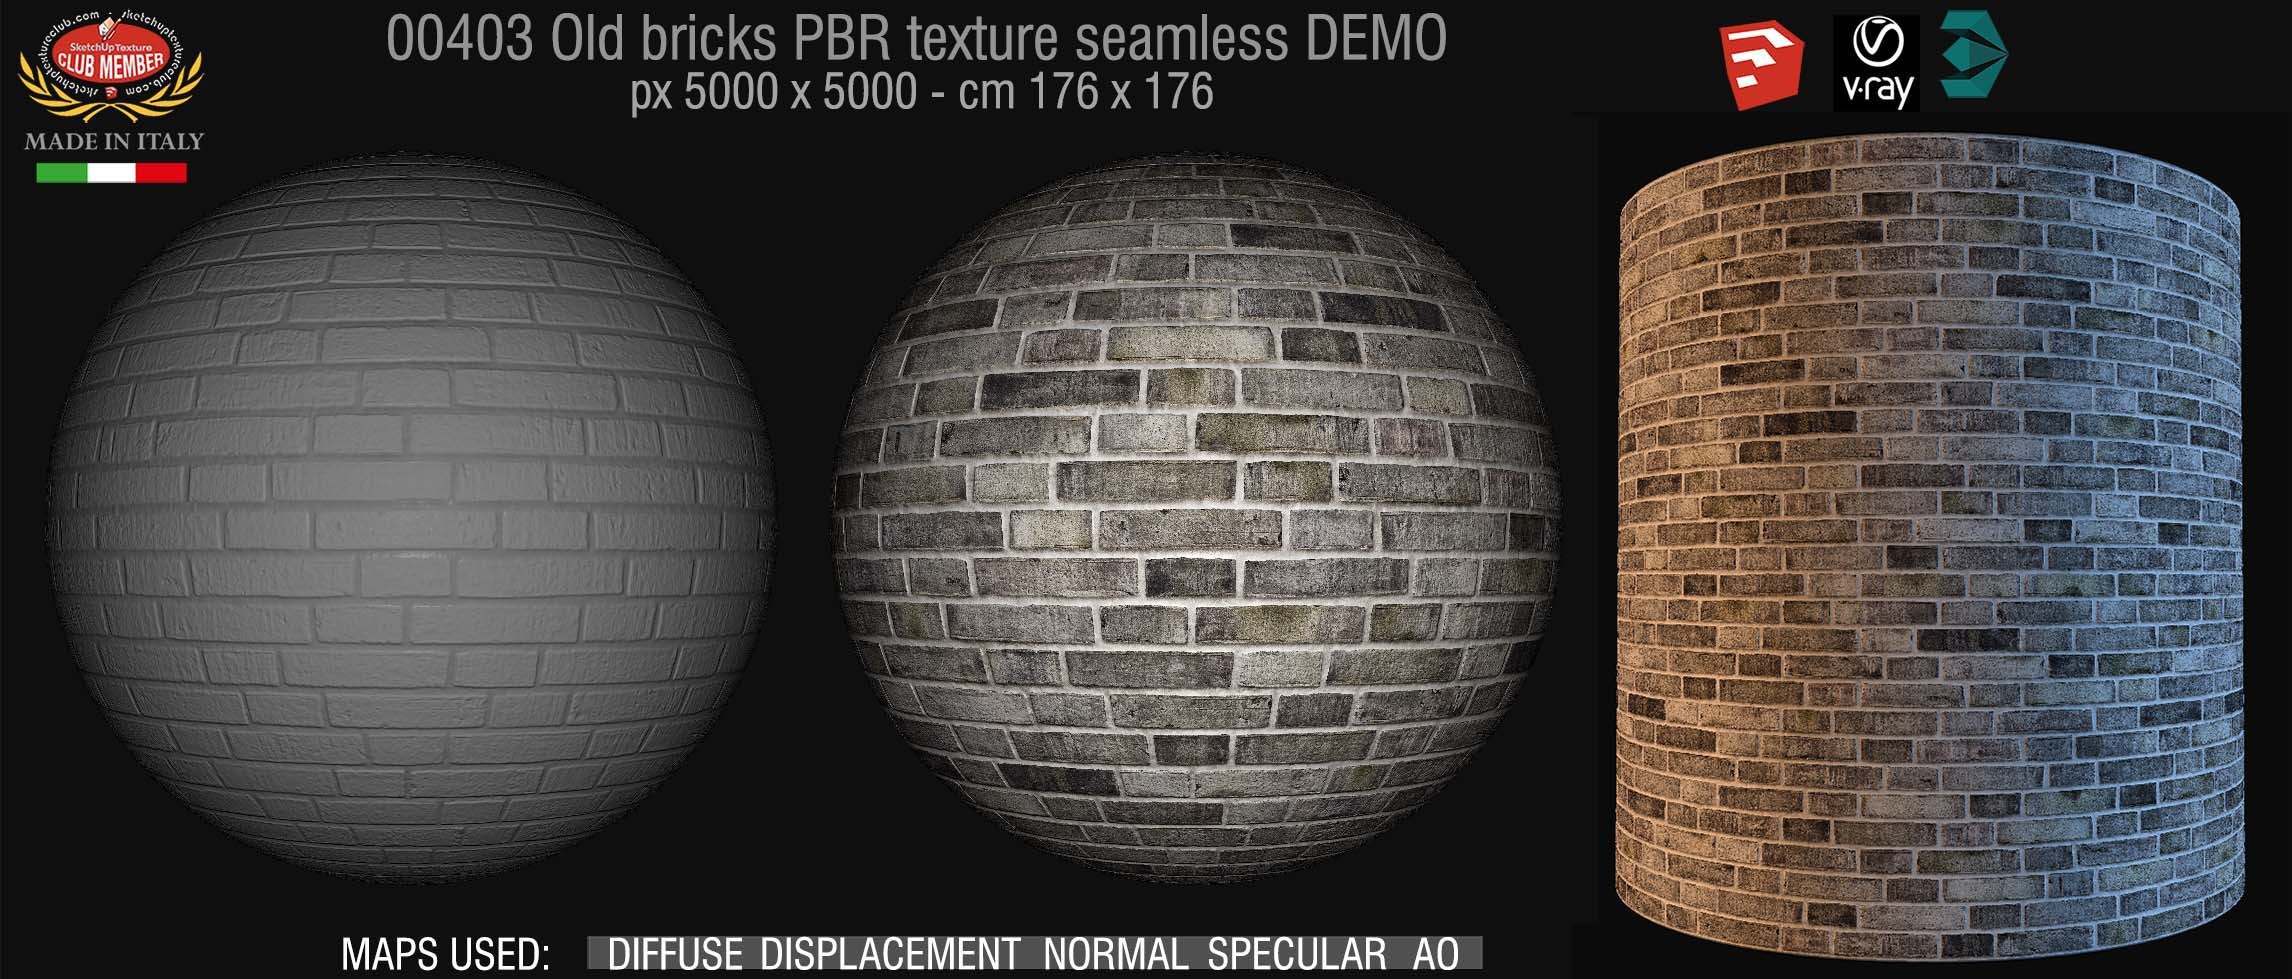 00403 Old bricks PBR texture seamless DEMO